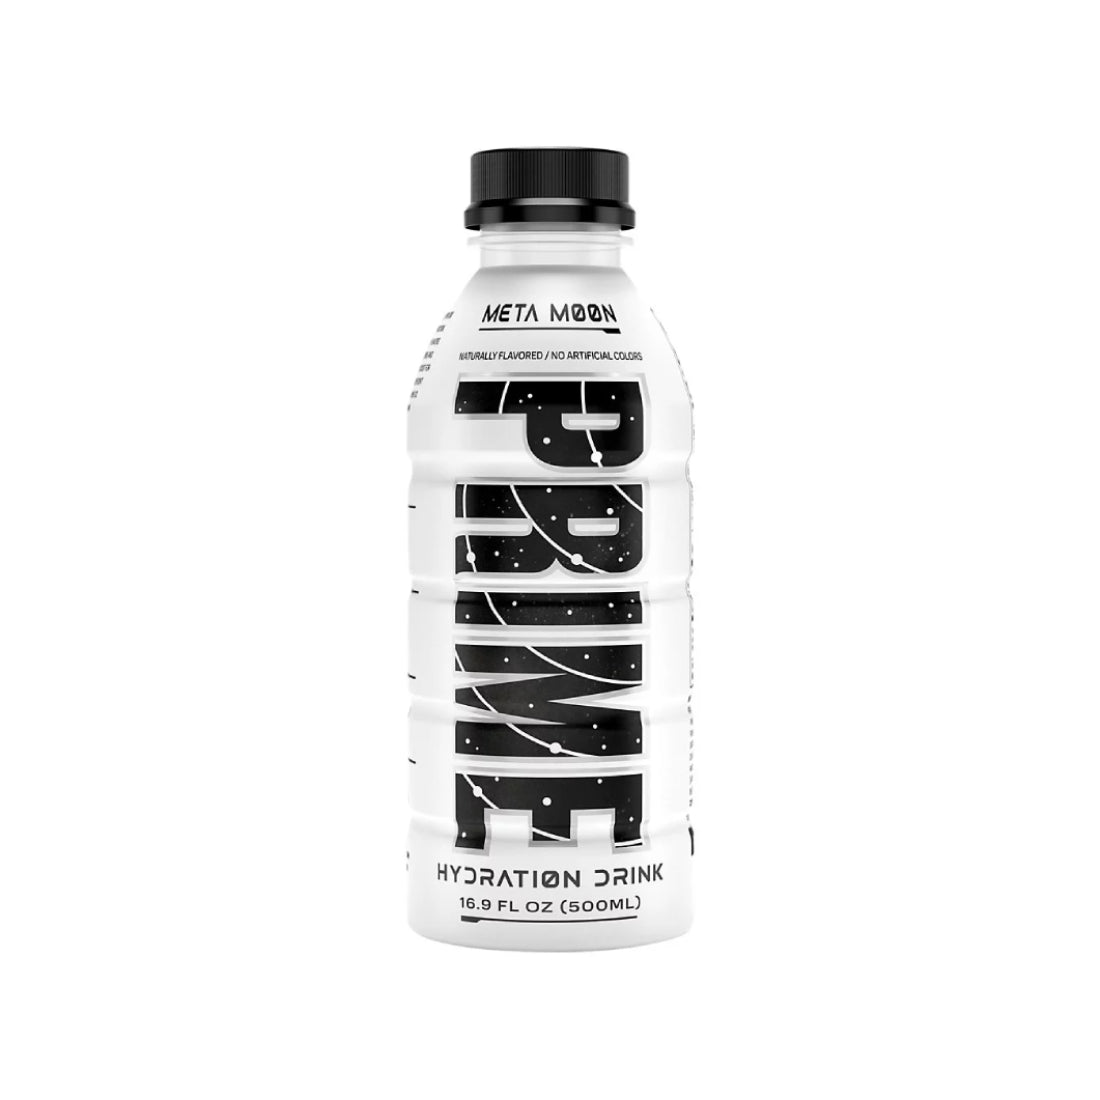 Prime Hydration Drink - Meta Moon - مشروب هيدراتيه - Store 974 | ستور ٩٧٤